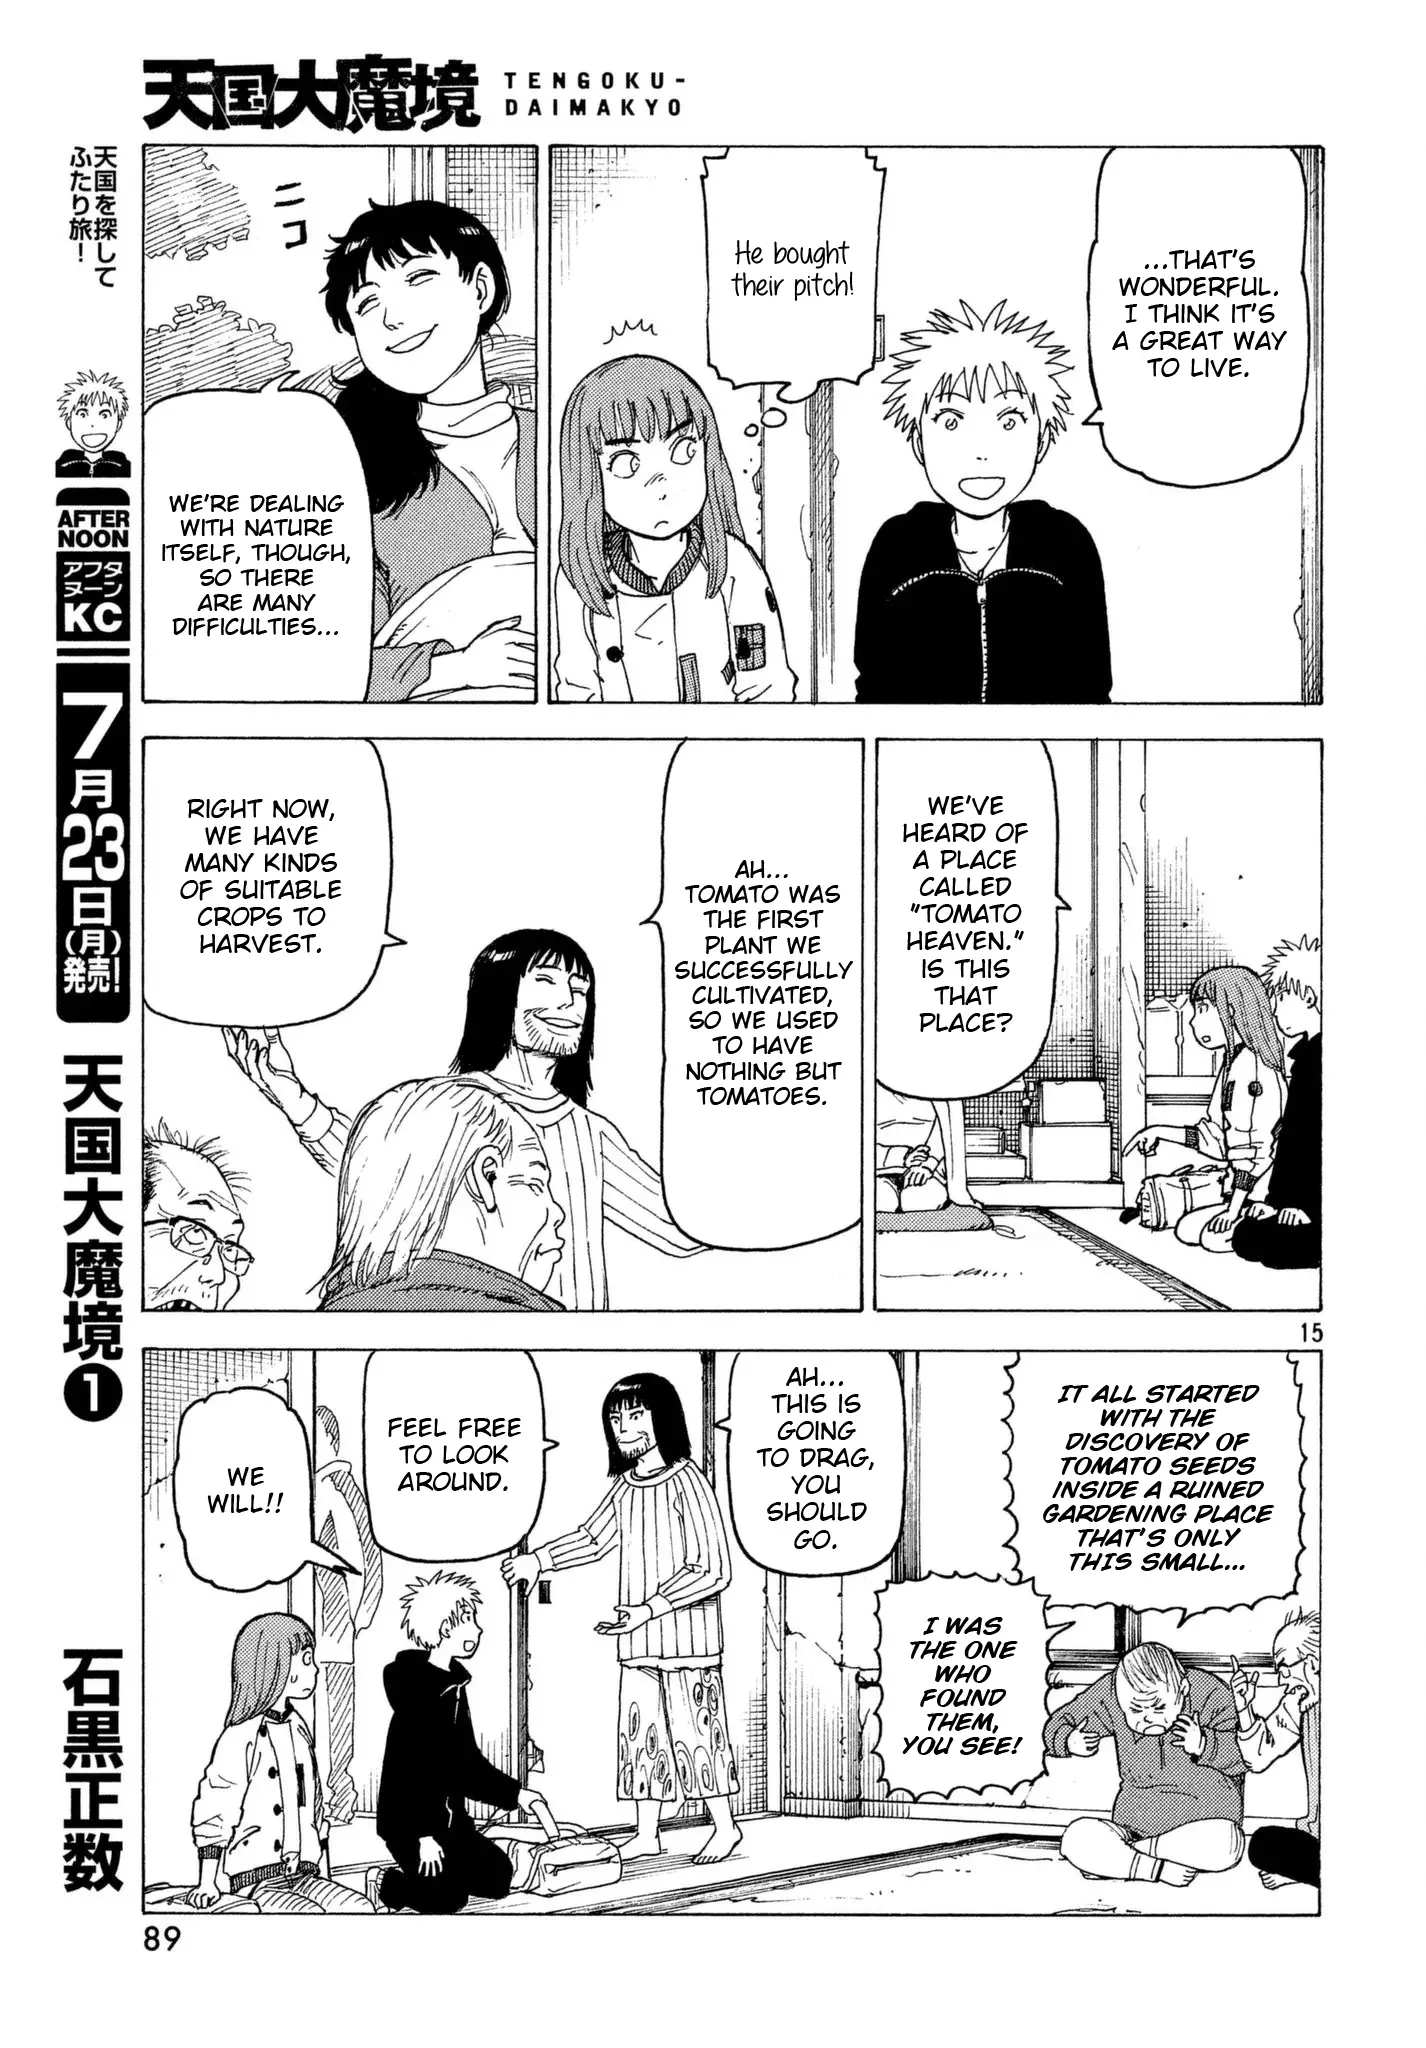 Tengoku Daimakyou - 7 page 15